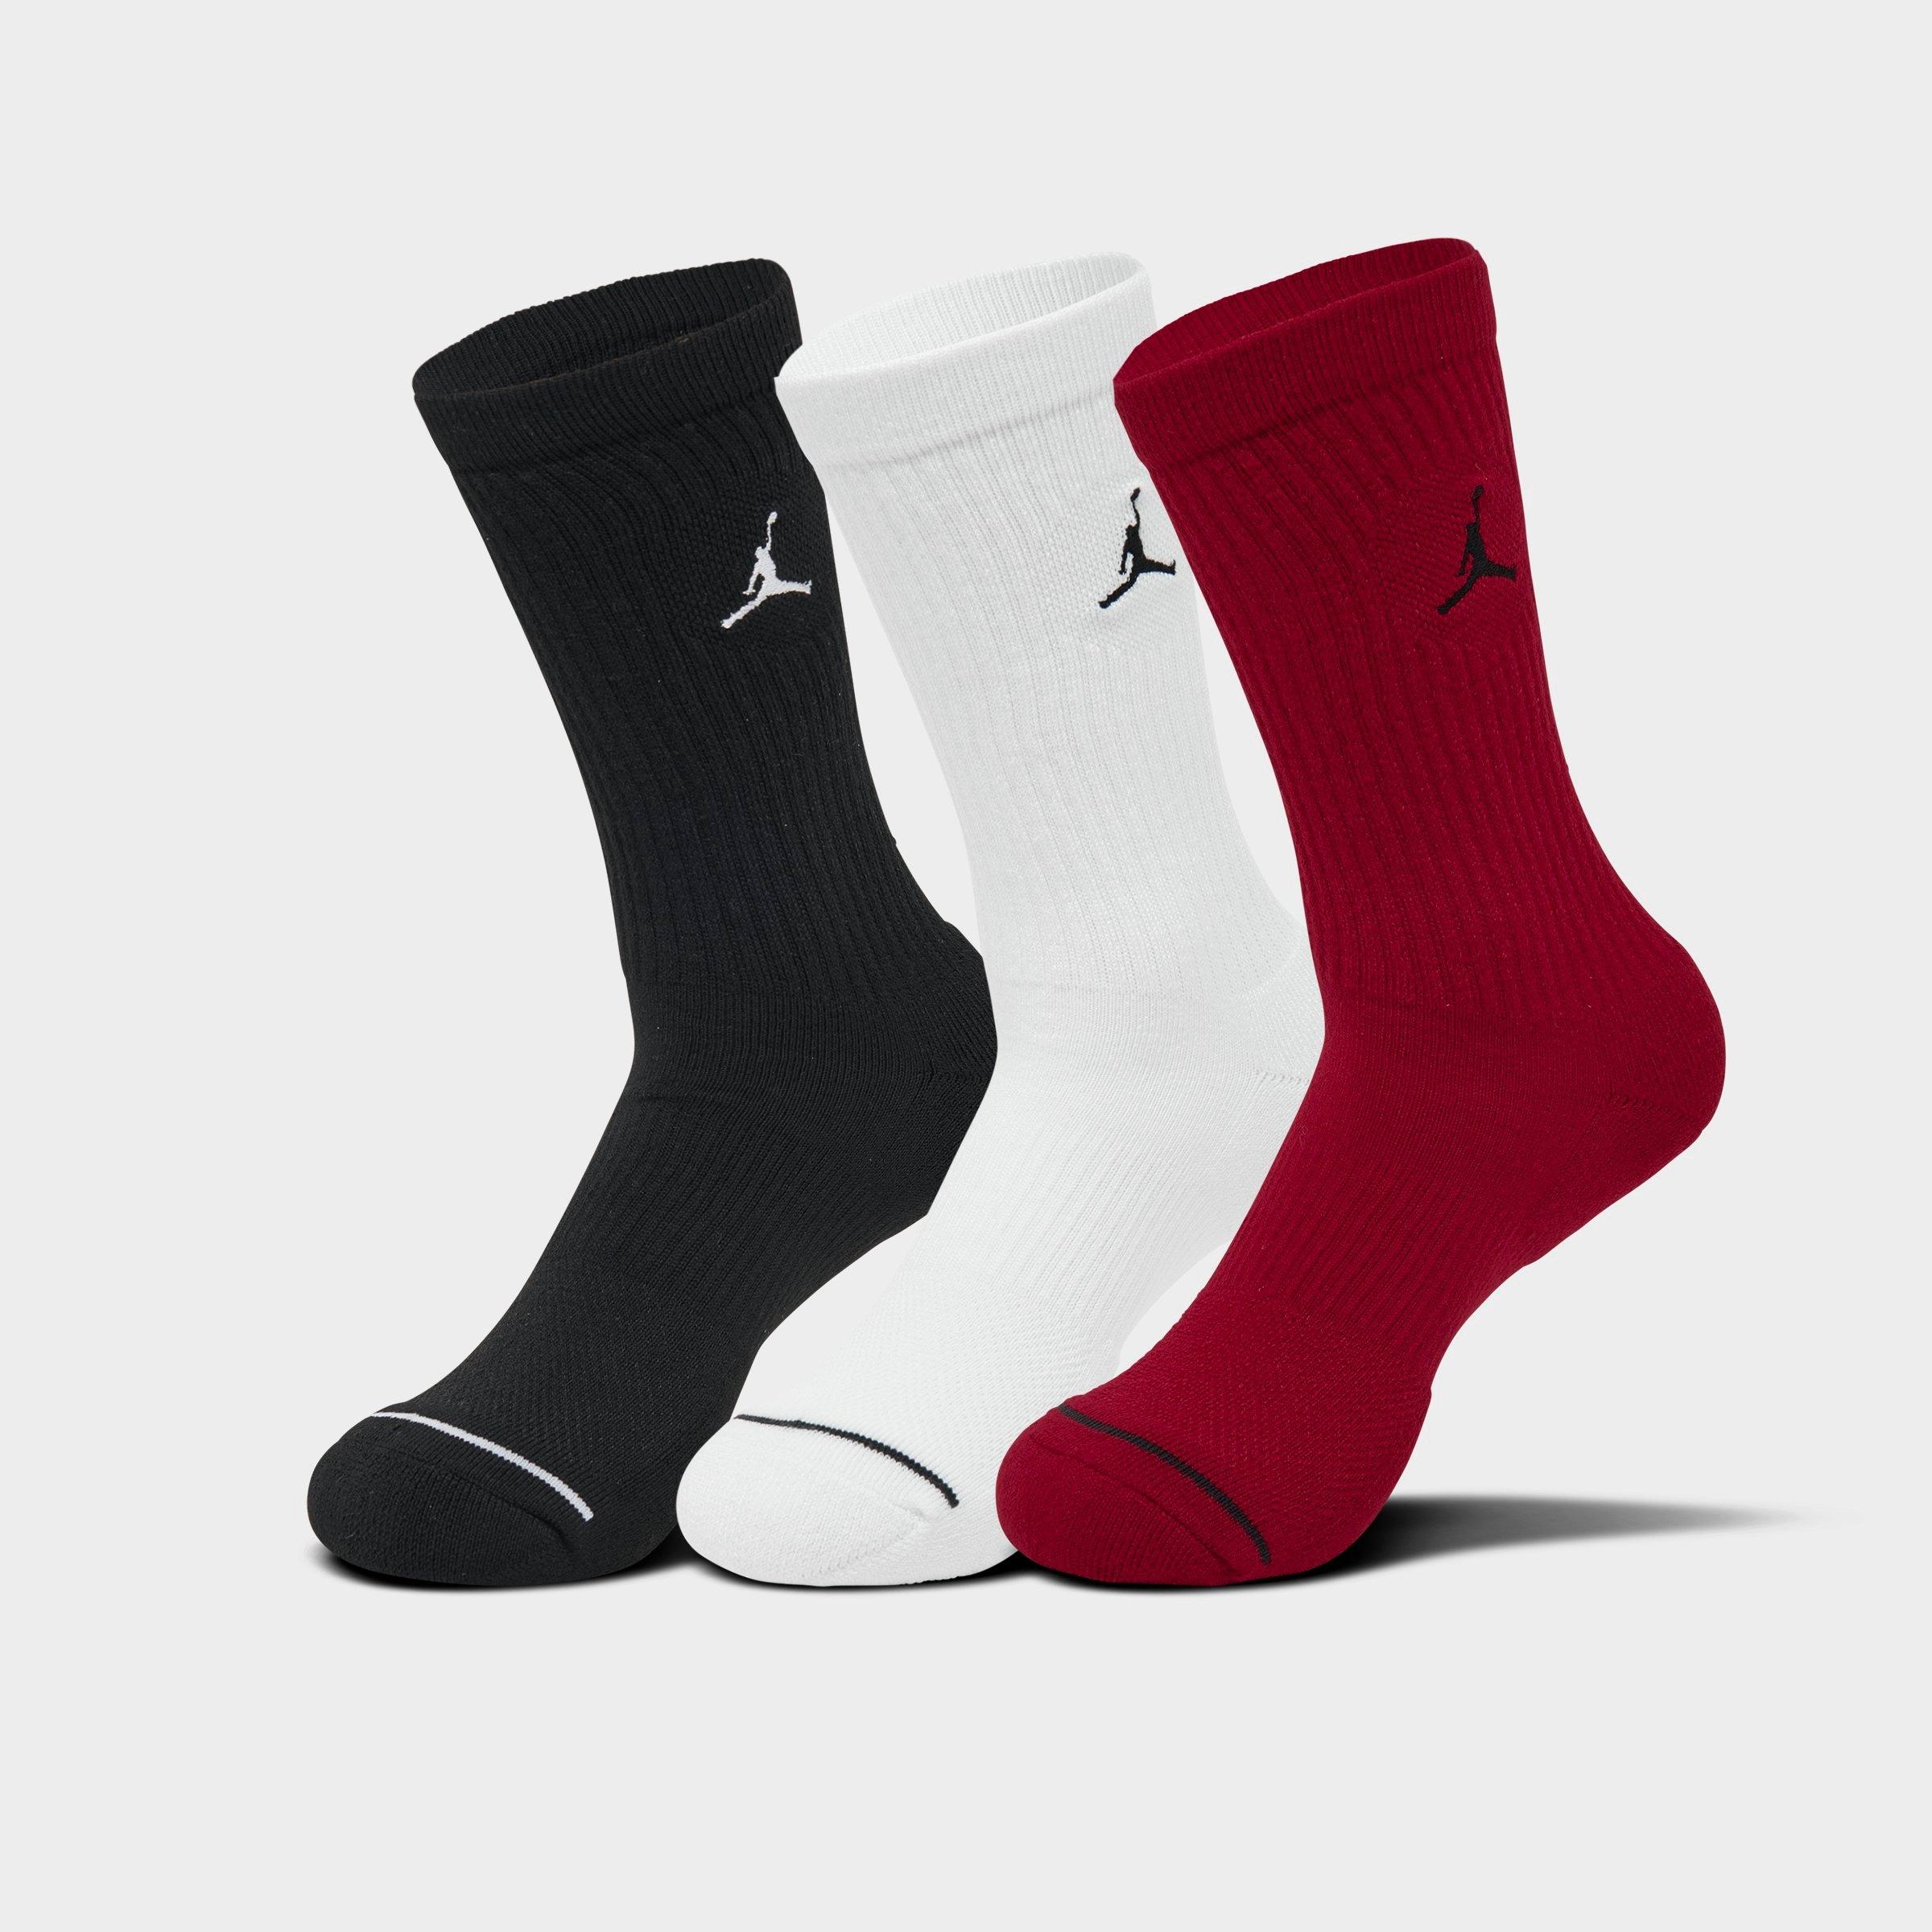 Nike Jordan Men's Everyday Crew Socks (3-pack) In Red/white/black